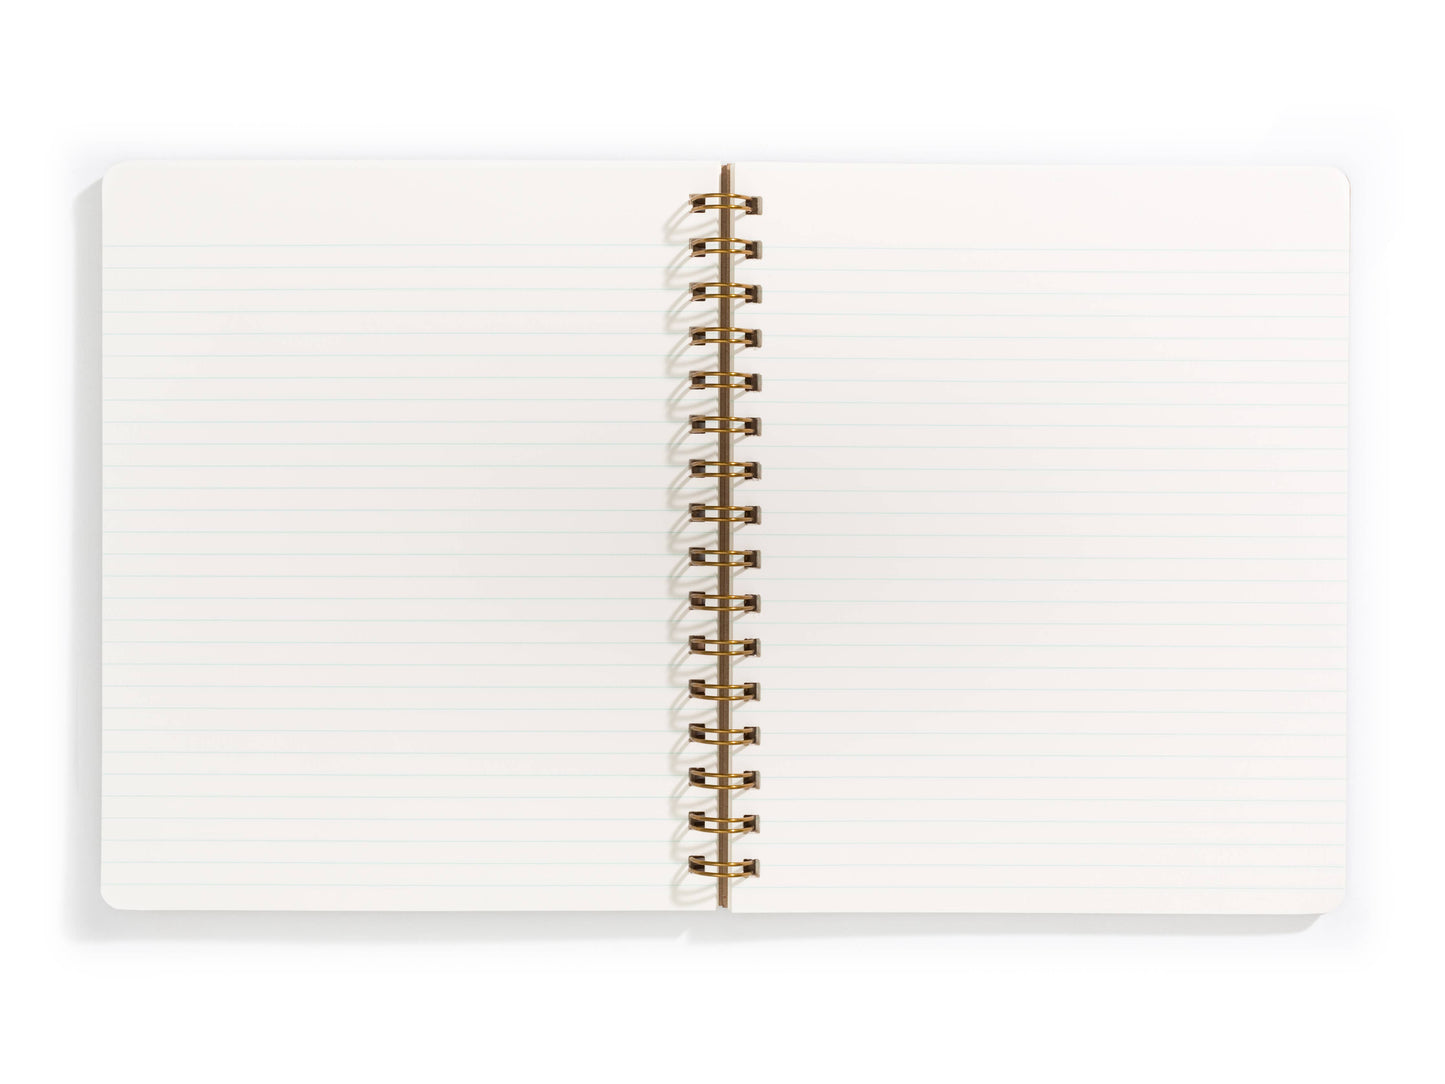 Shorthand Press - Standard Notebook - Lilac